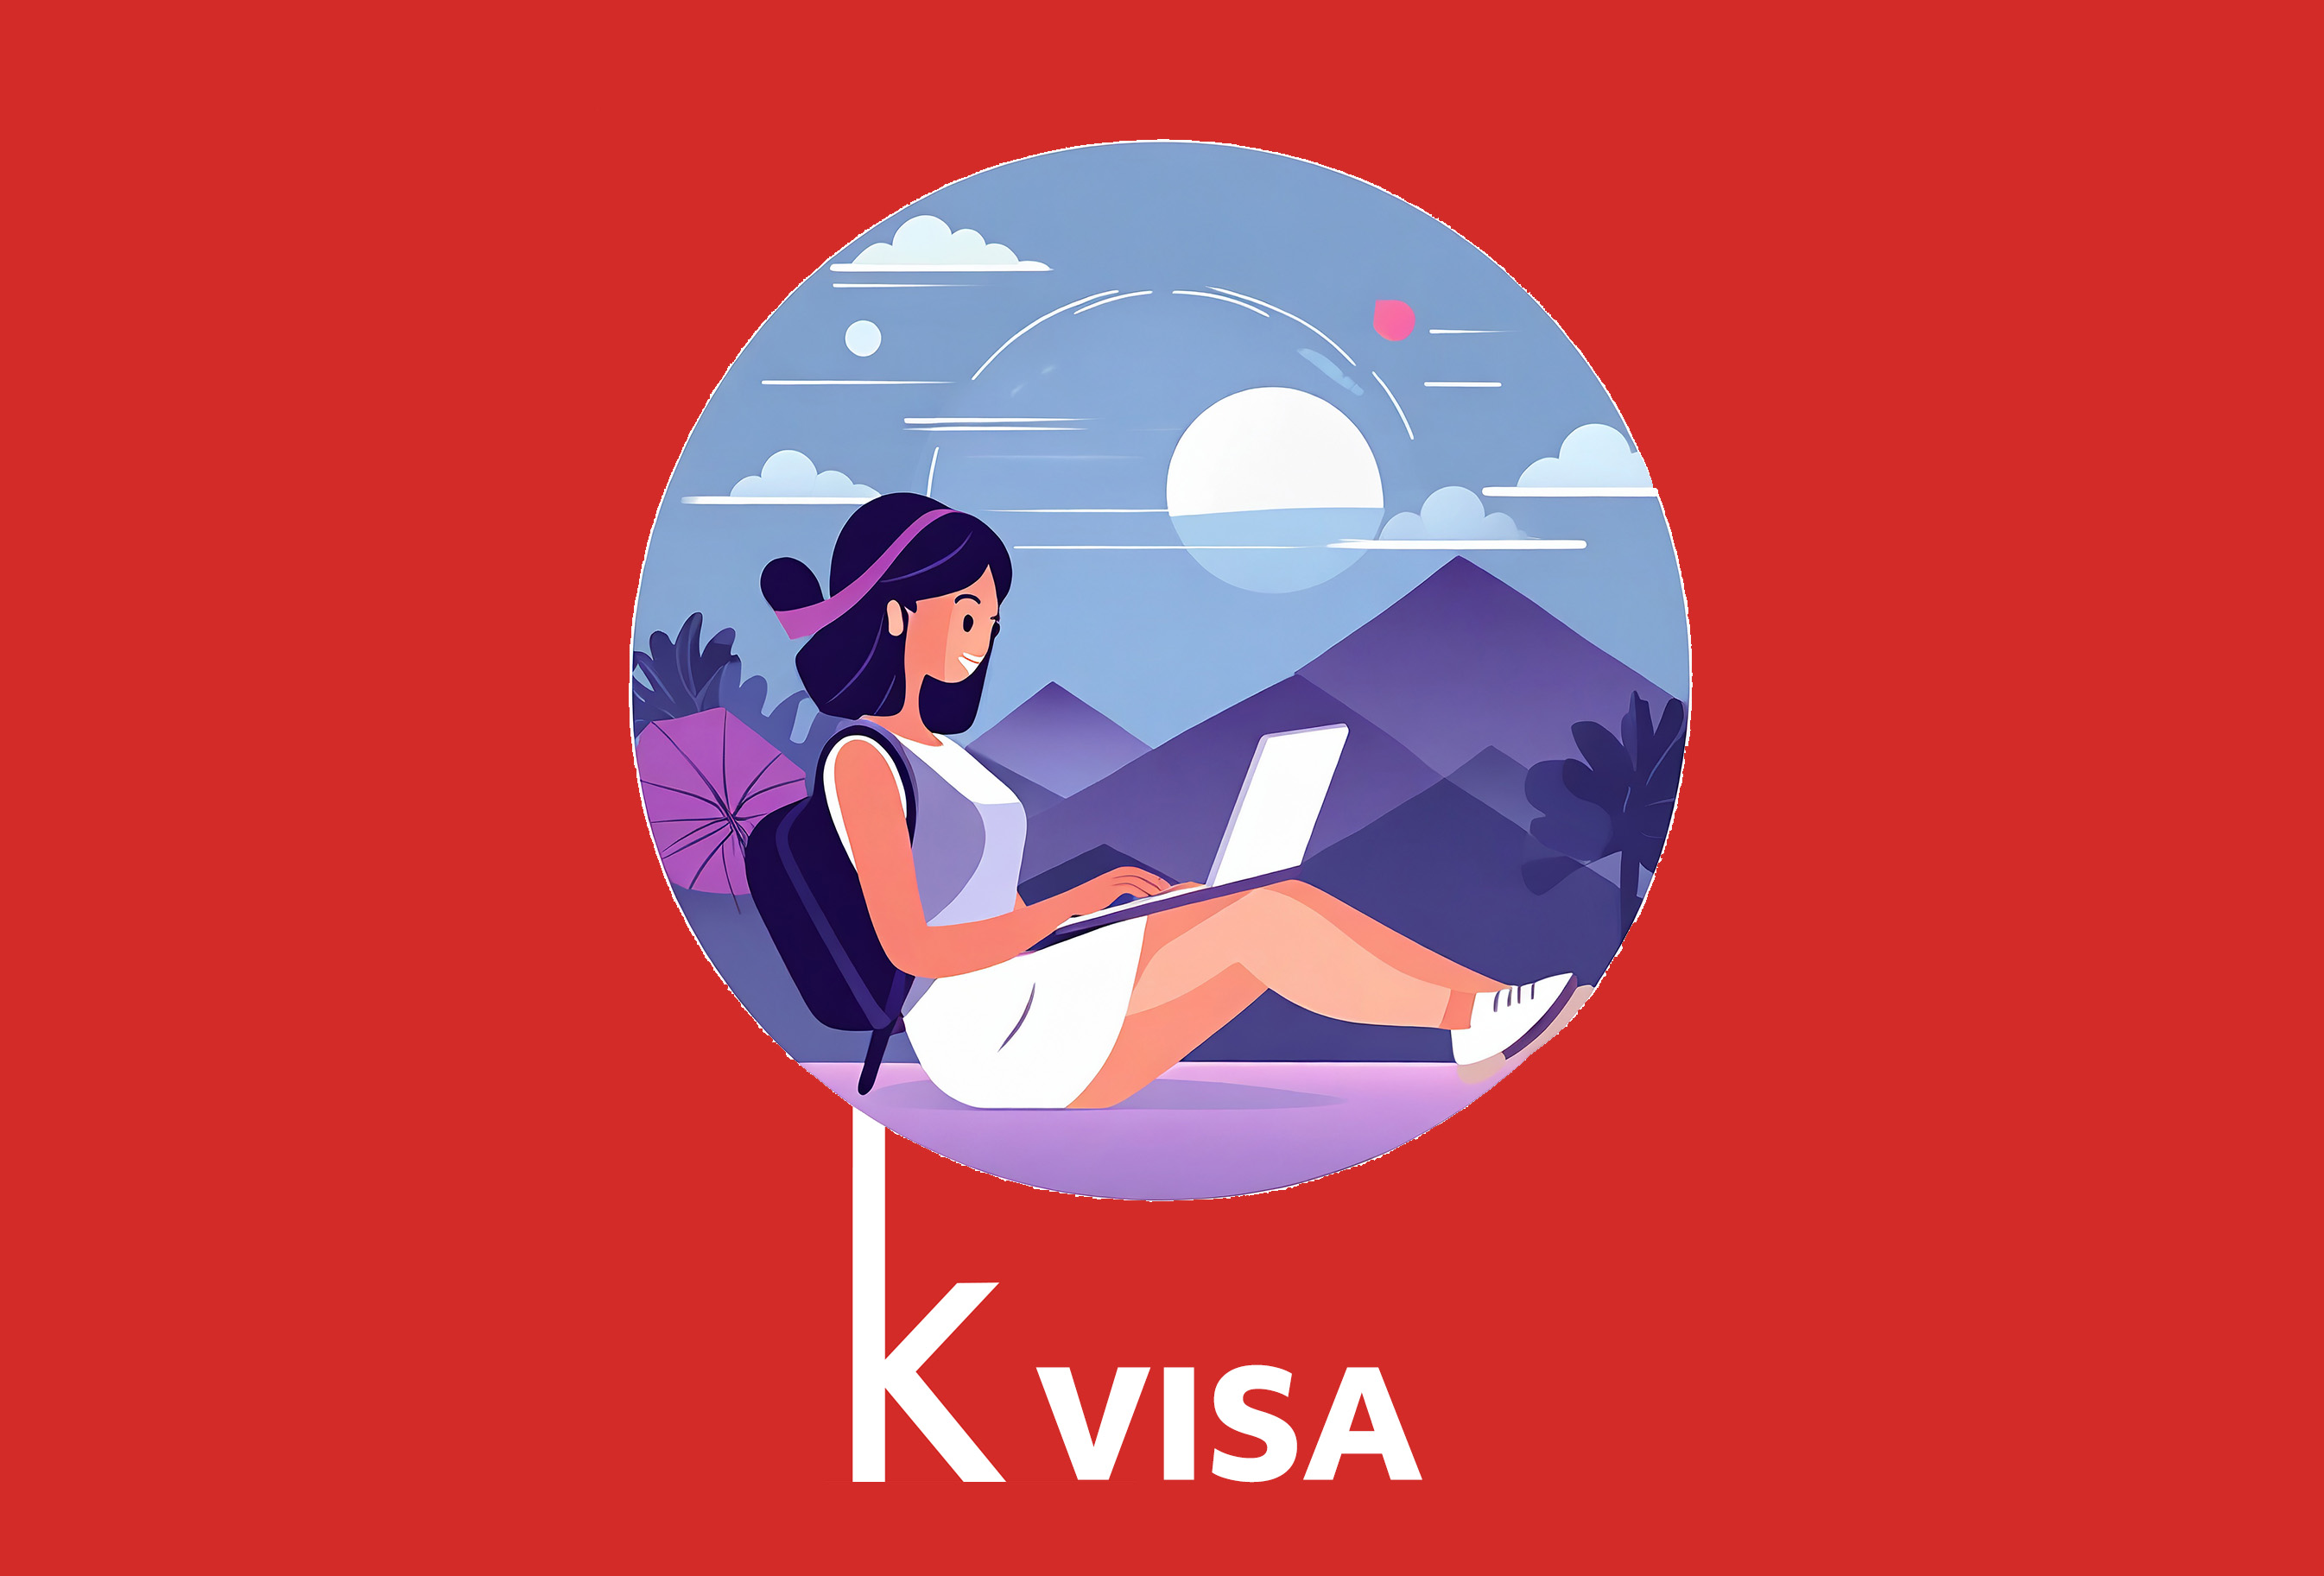 H2 Visa profile.jpg